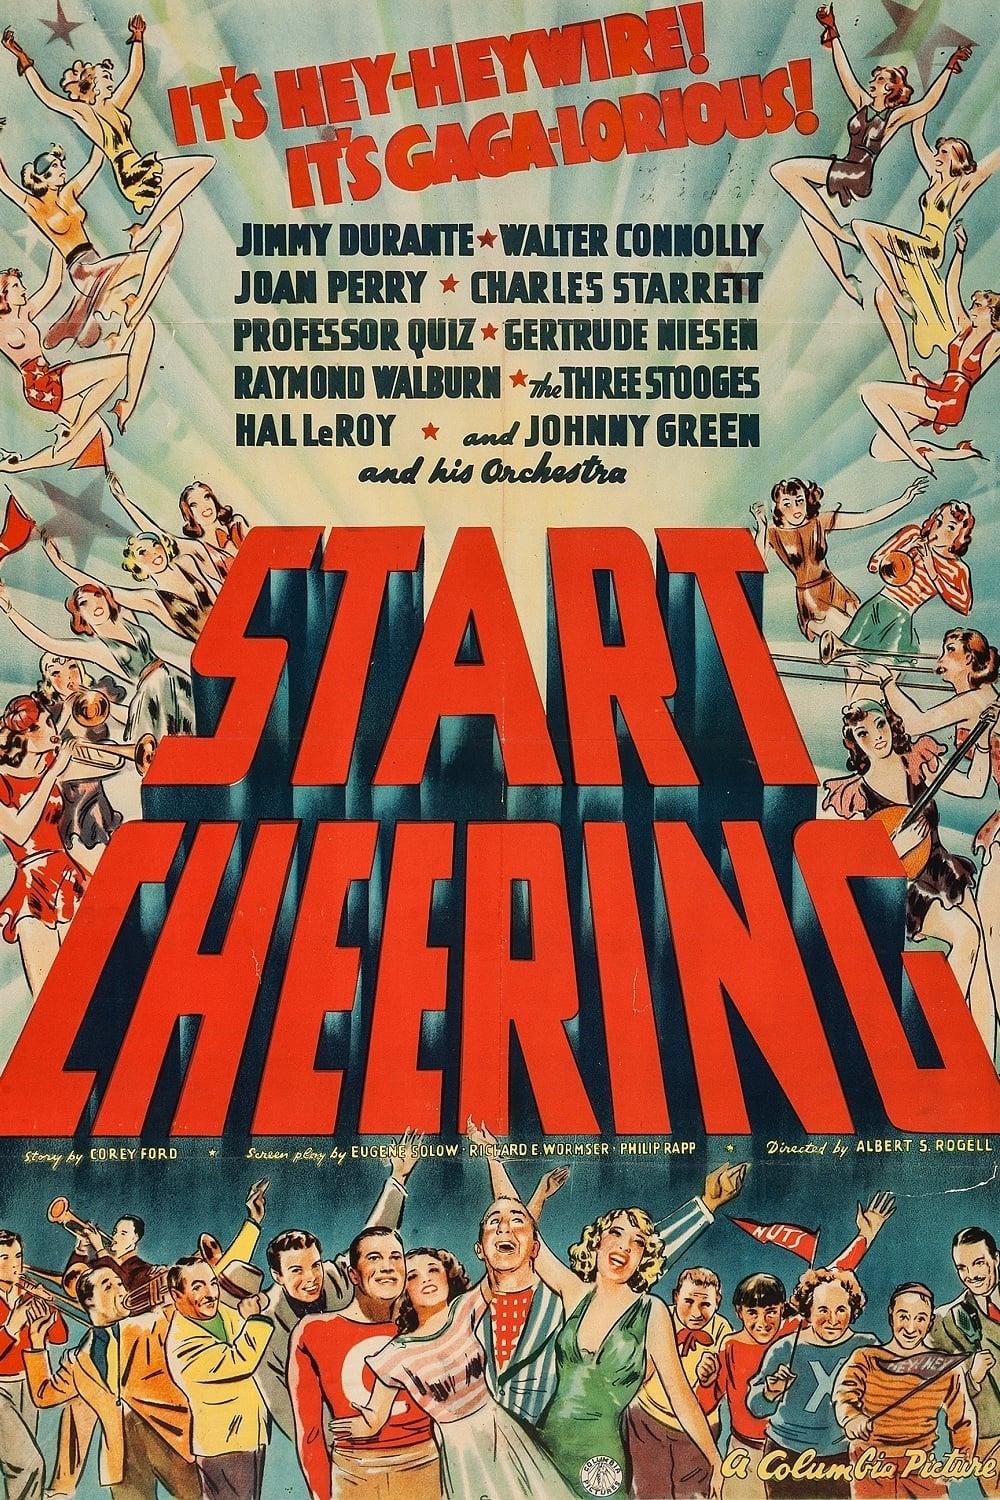 Start Cheering poster